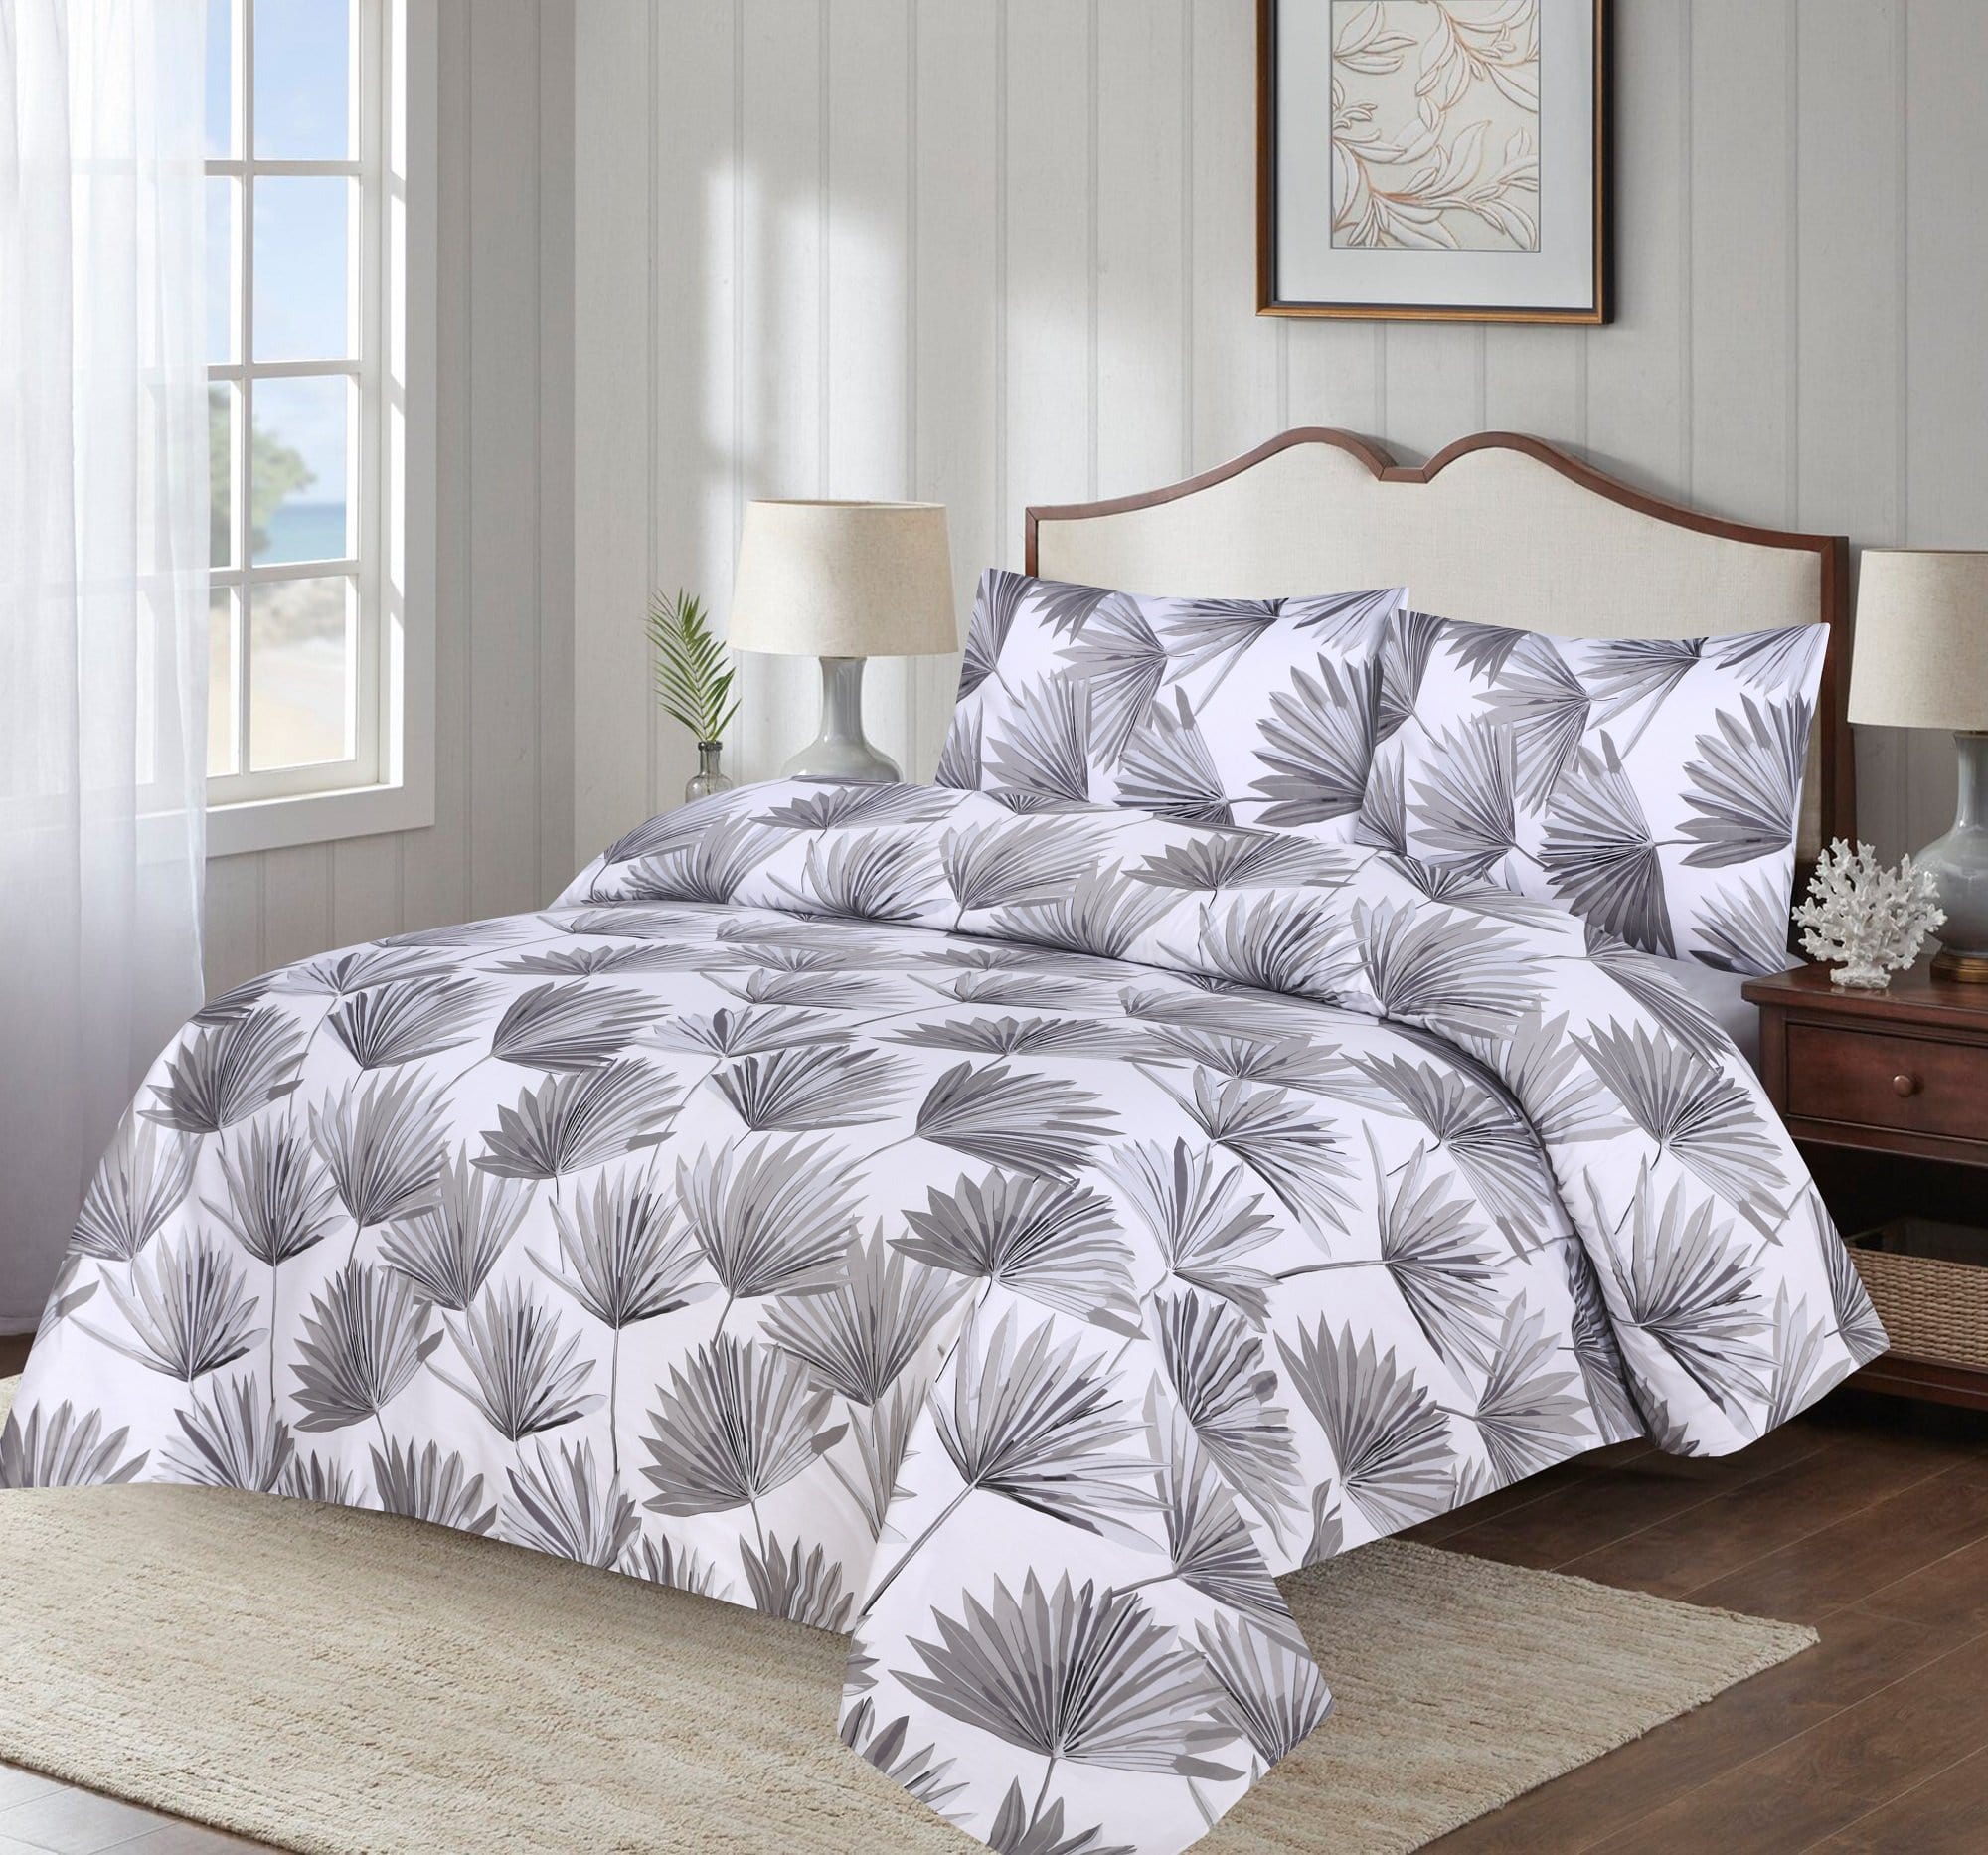 Grace D418-Reactive cotton Satin Quality Single Size Bedsheet with 1 pillow cover.